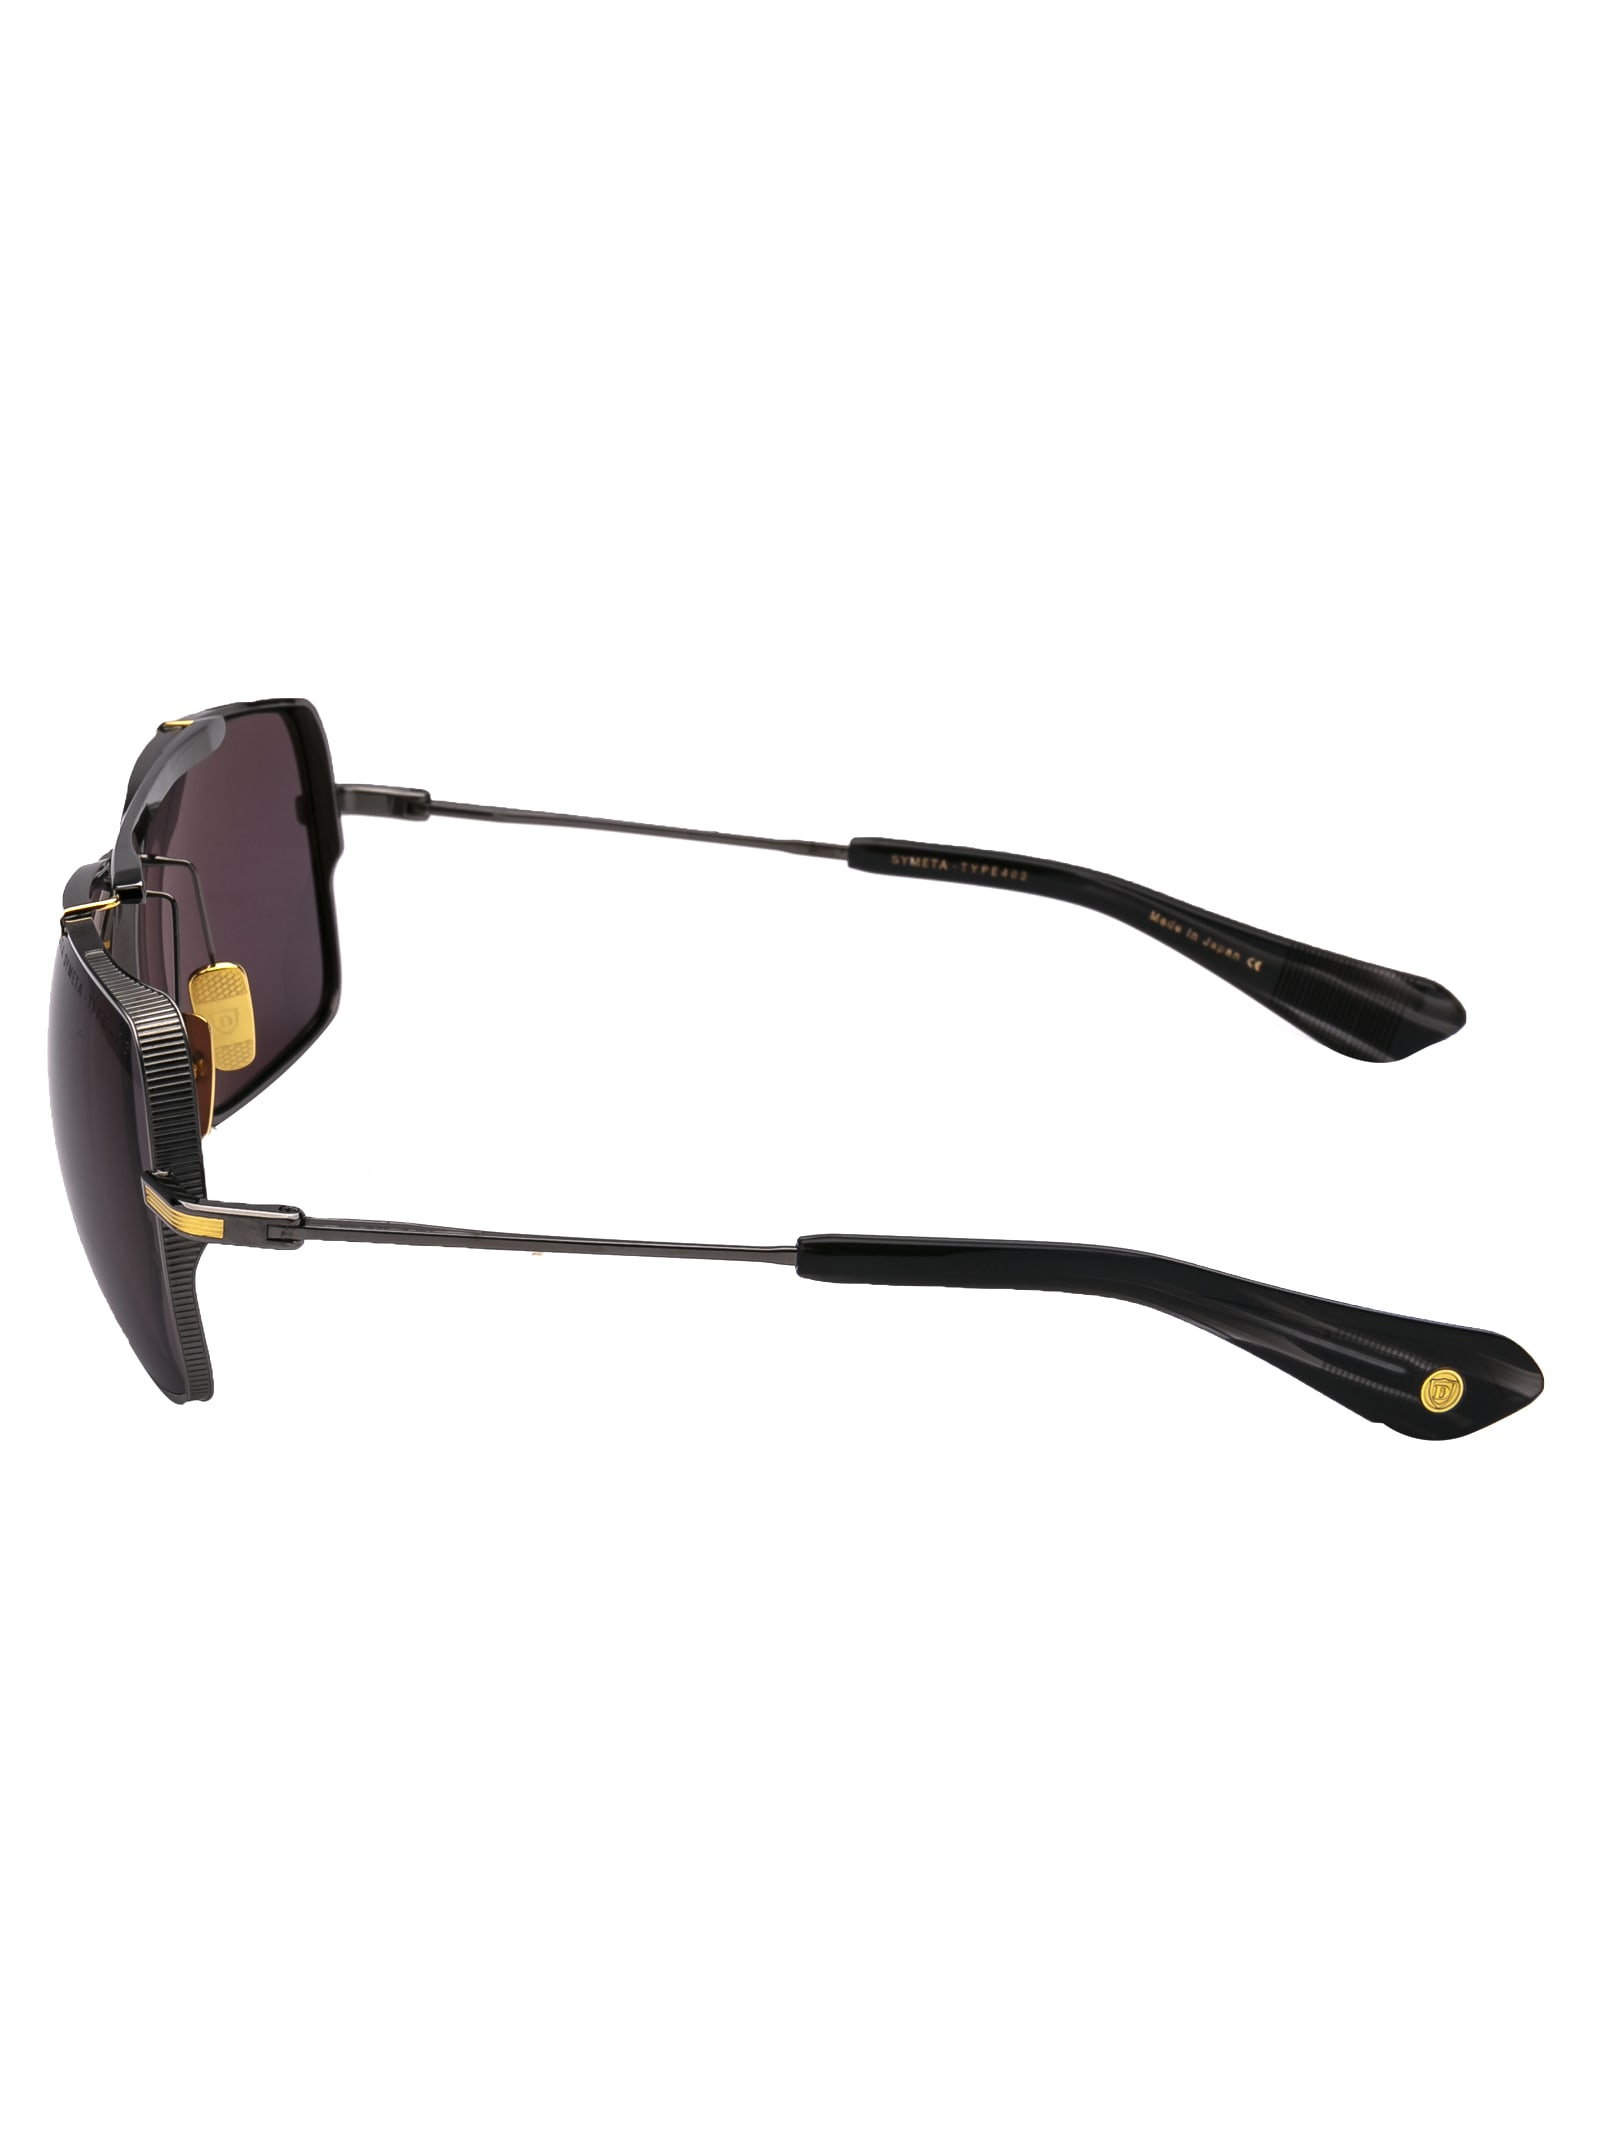 Shop Dita Symeta - Type 403 Sunglasses In Black Rhodium - Yellow Gold